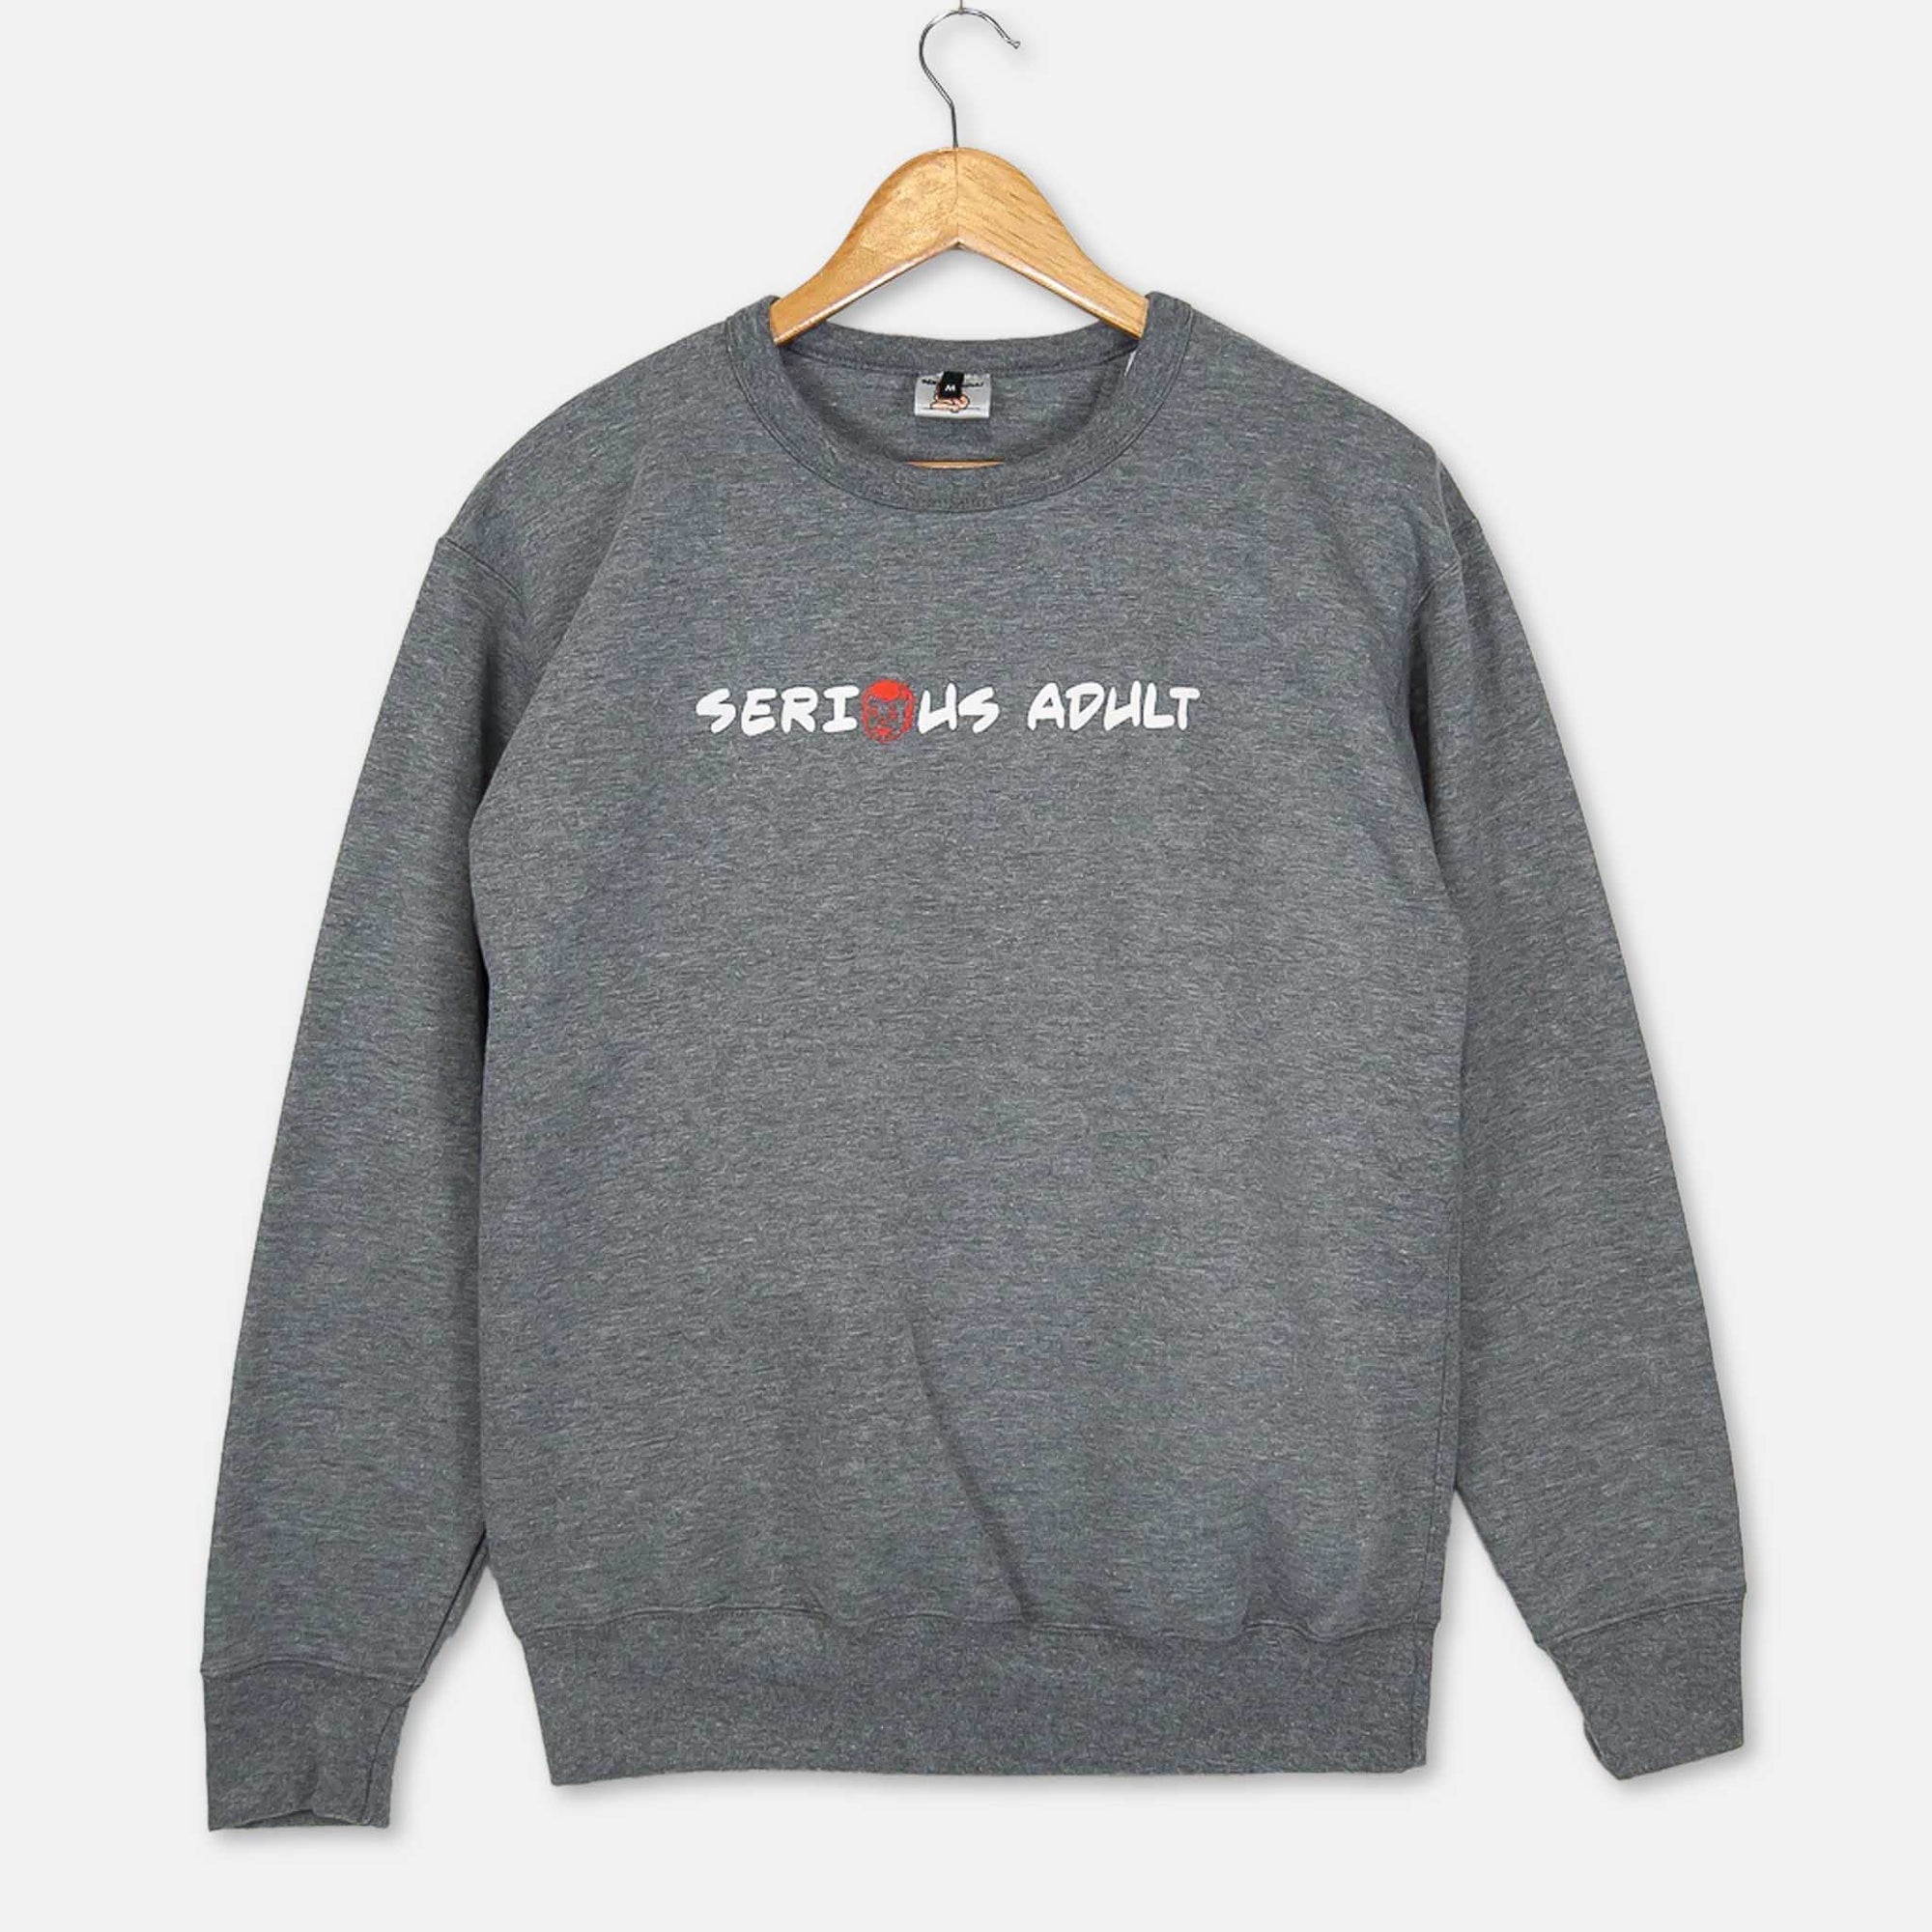 Serious Adult - Baker Boy Crewneck Sweatshirt - Grey